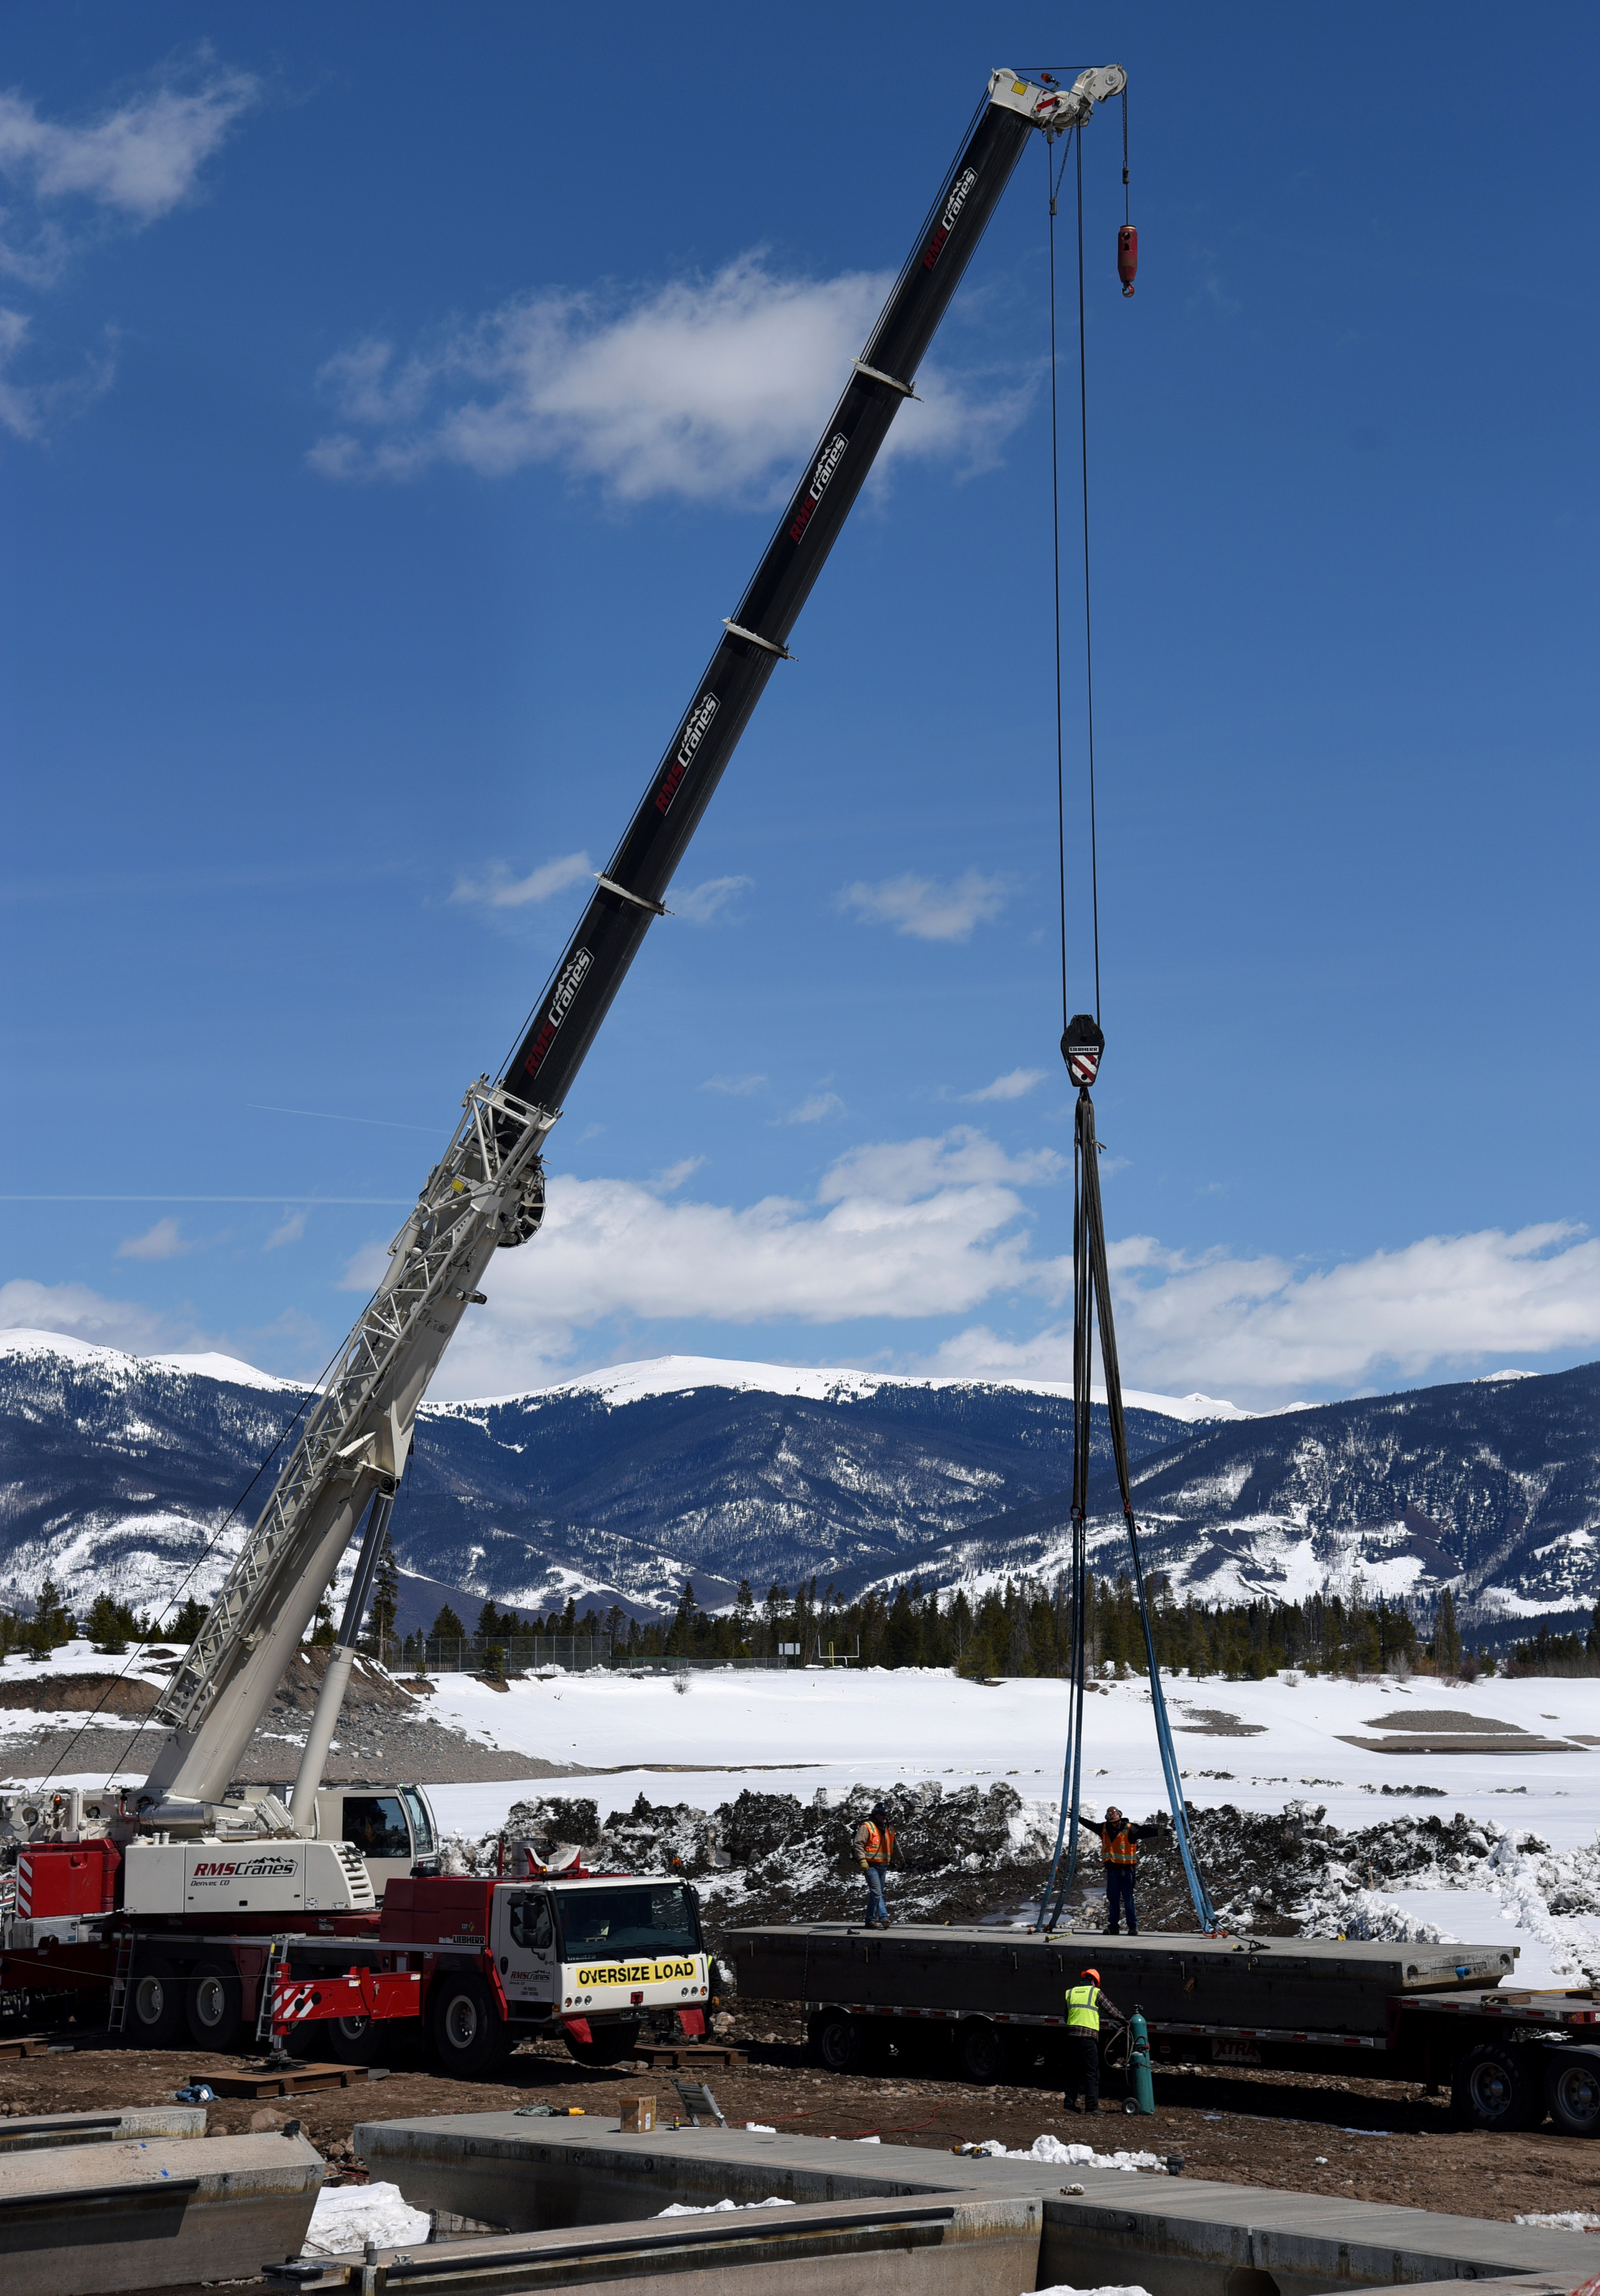 A crane picks up a giant slab of concrete under blue skies.